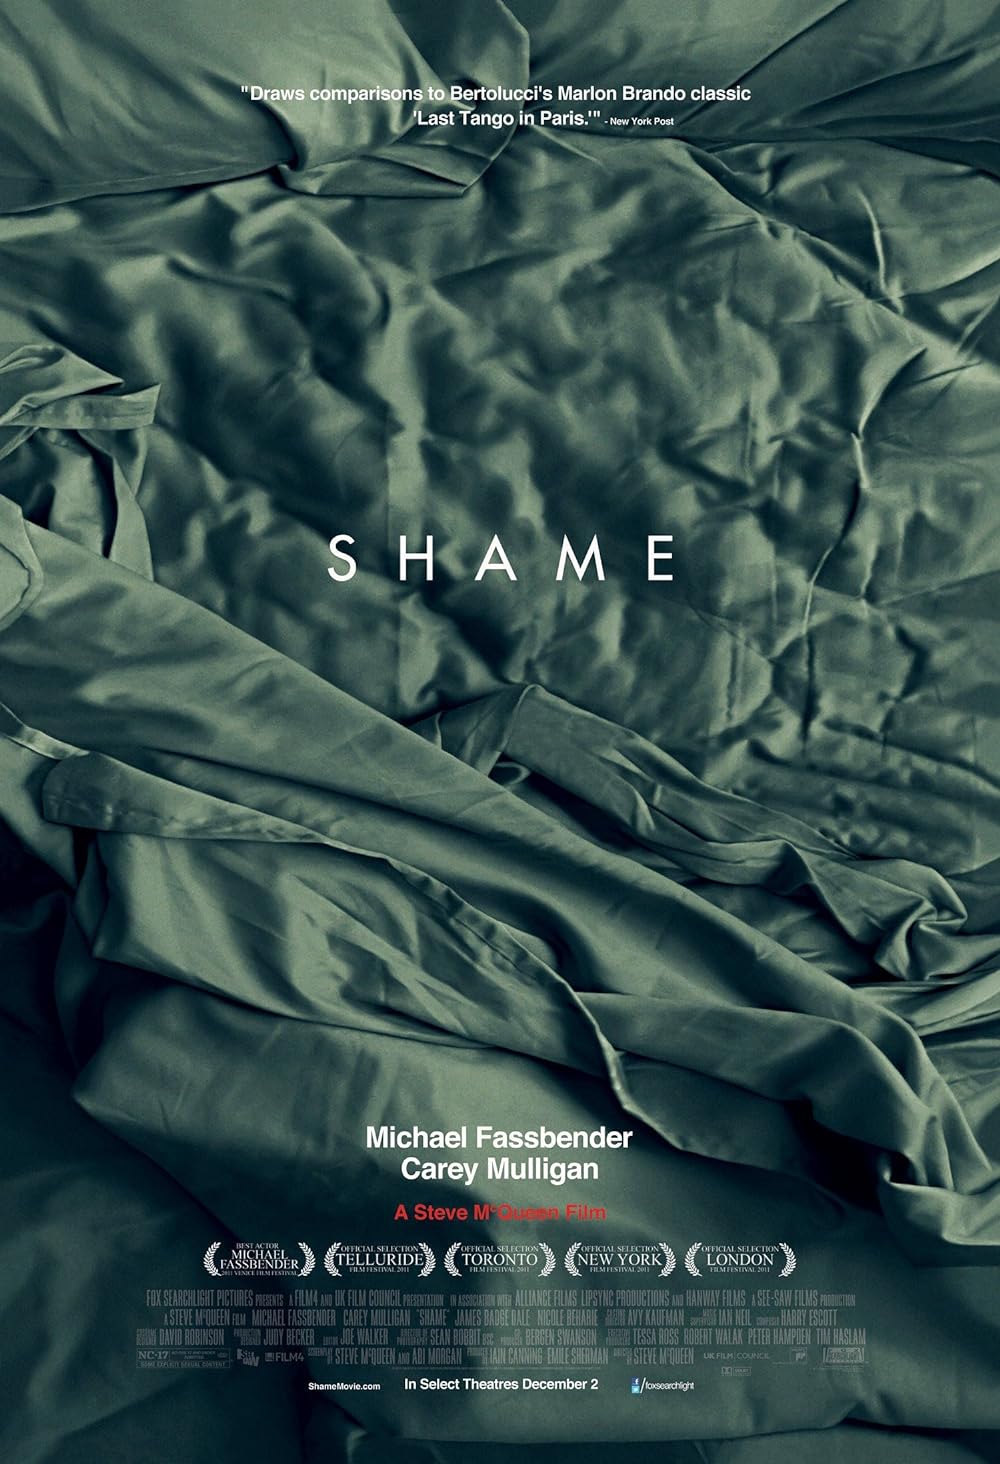 bradley layton recommends shame movie online free pic